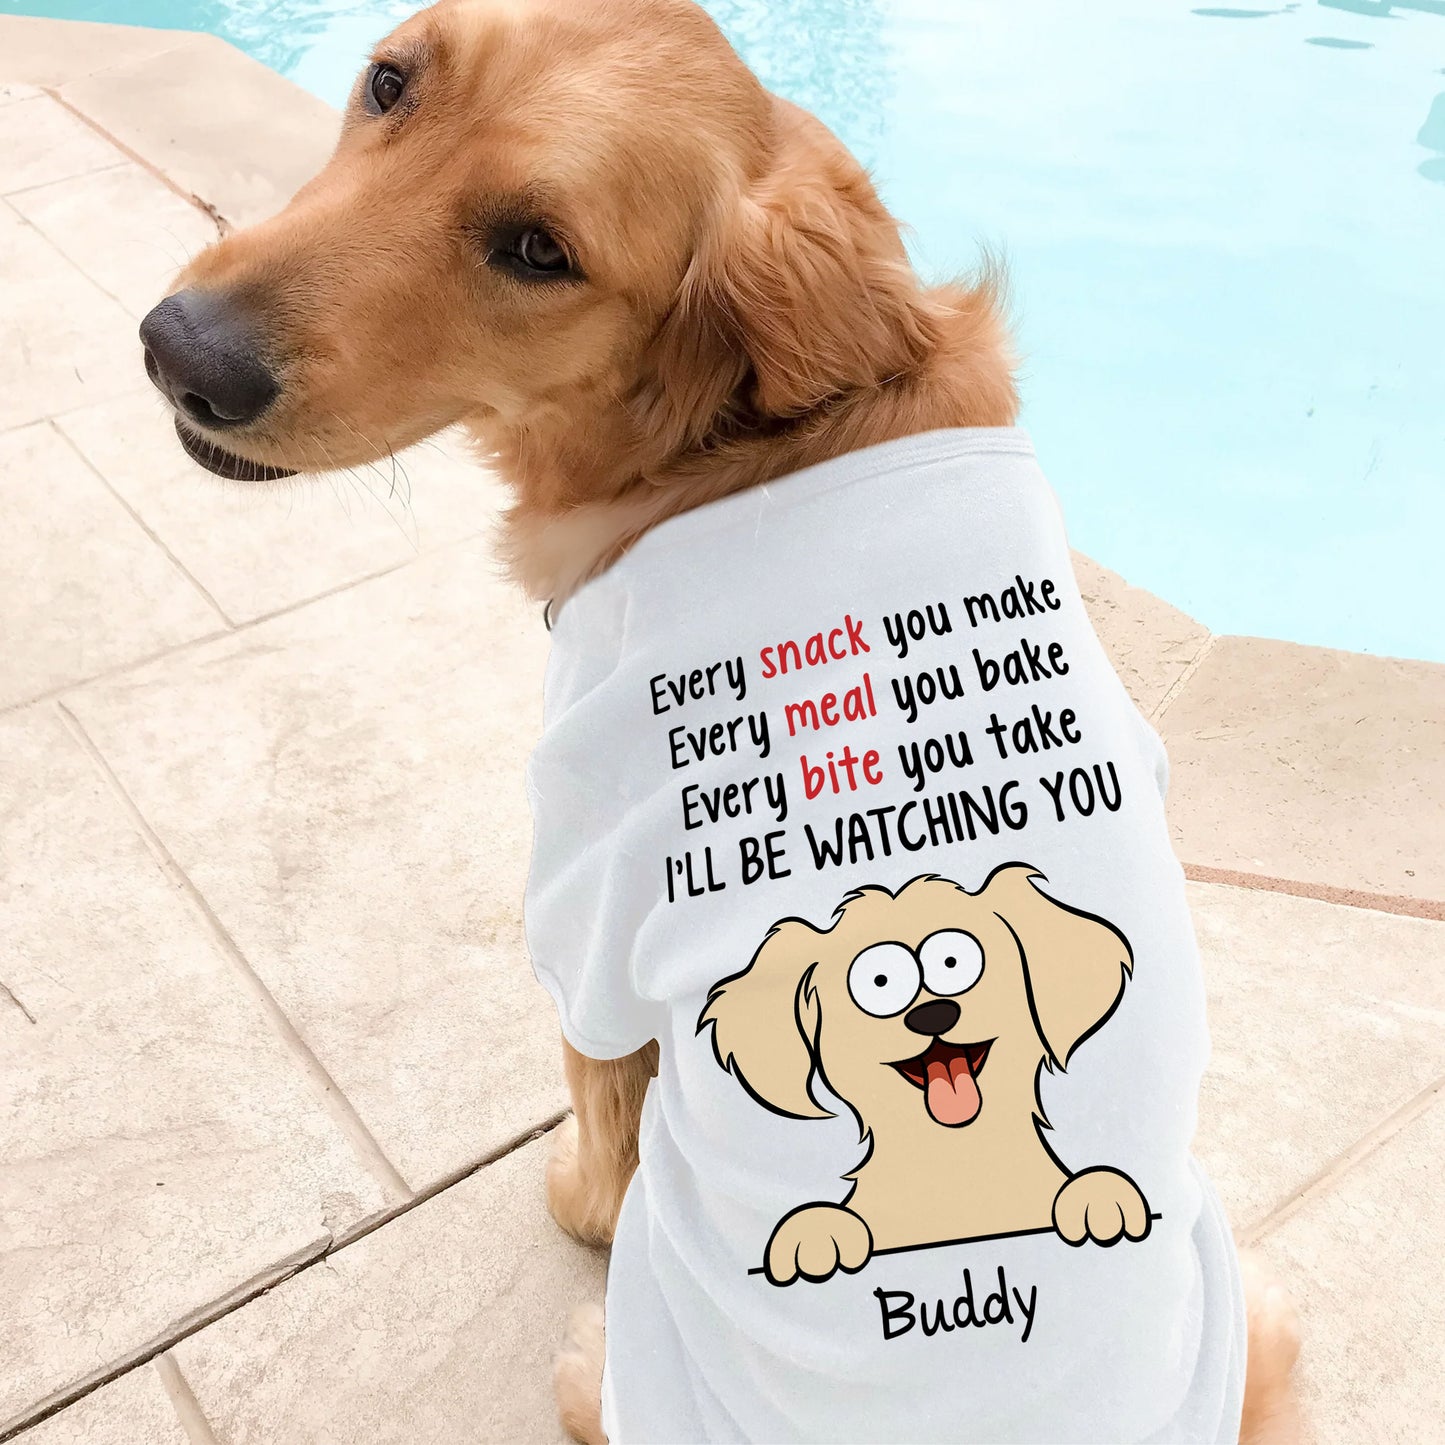 I'll Be Watching You - Personalized Pet Shirt